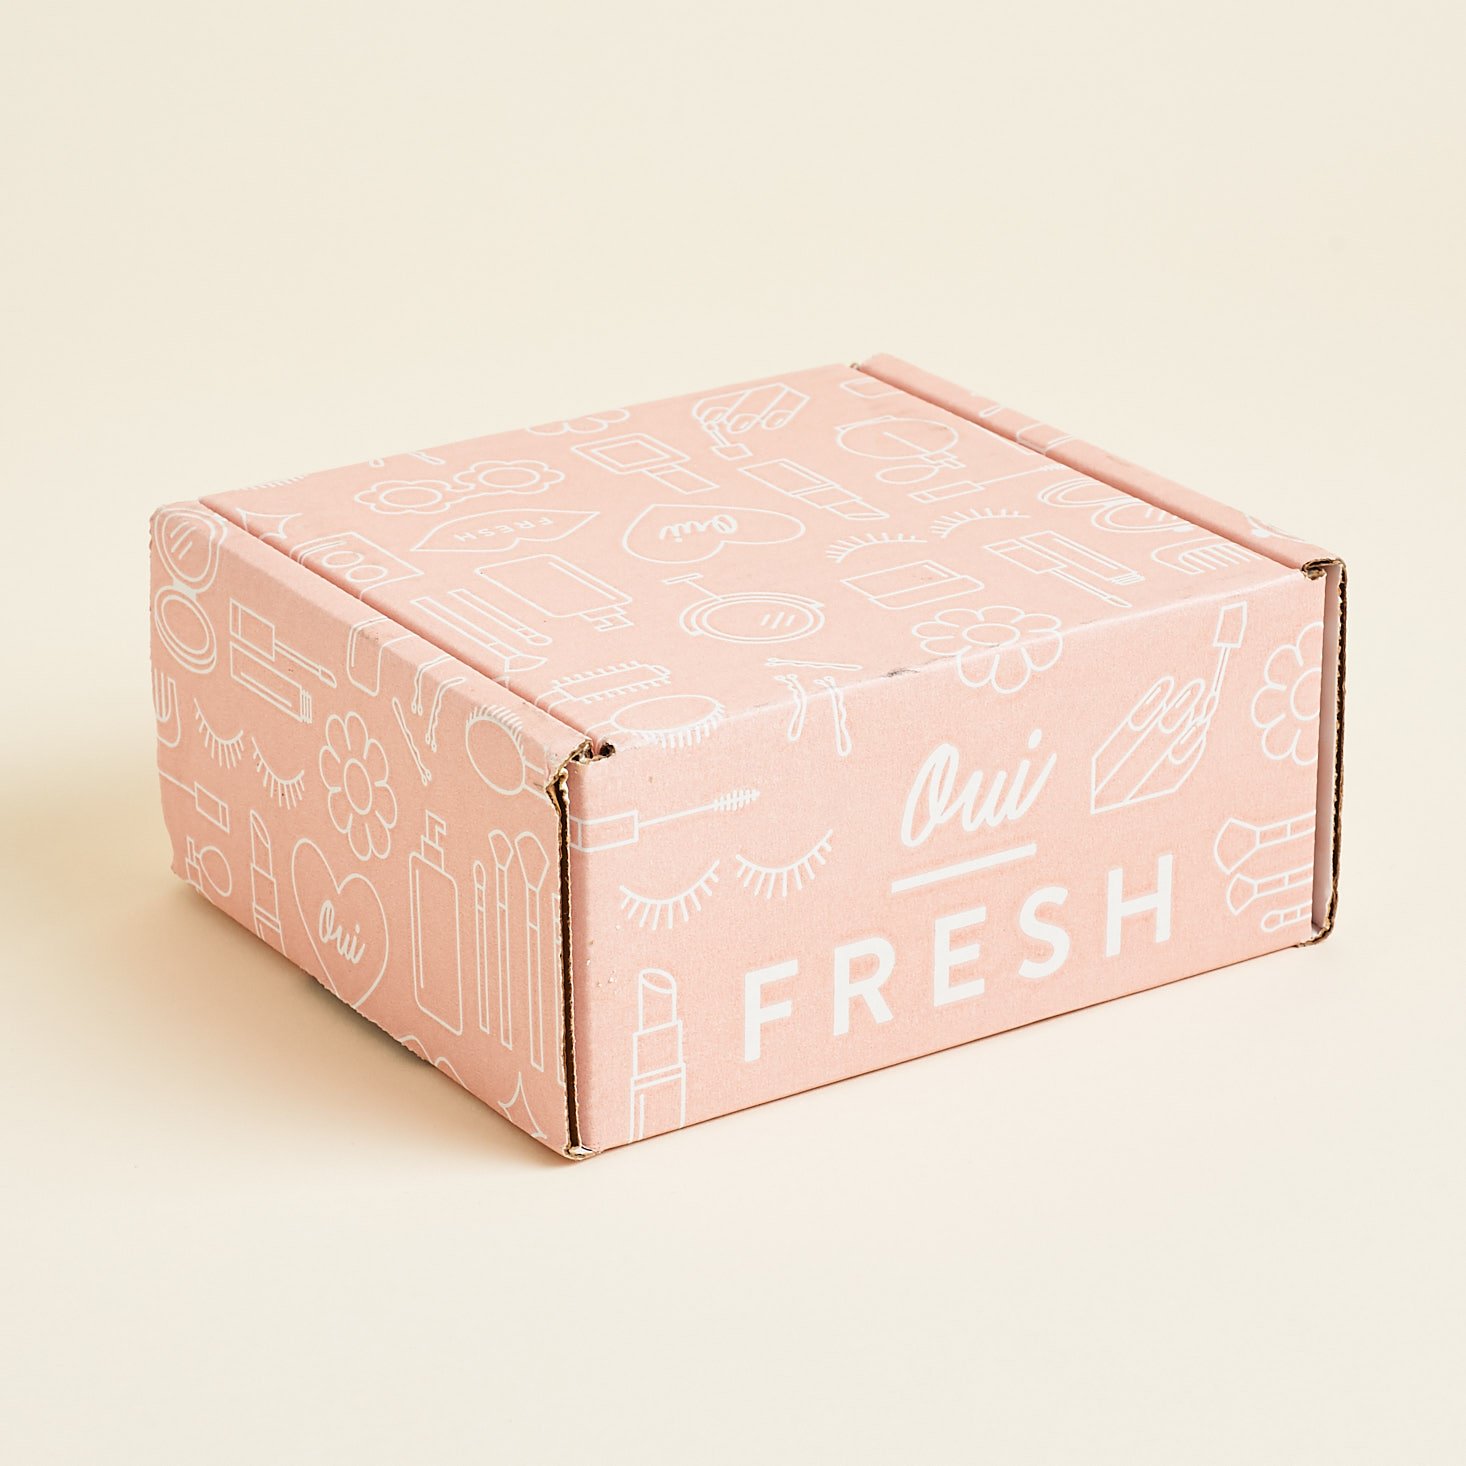 Oui Fresh Beauty Box Review – June 2019